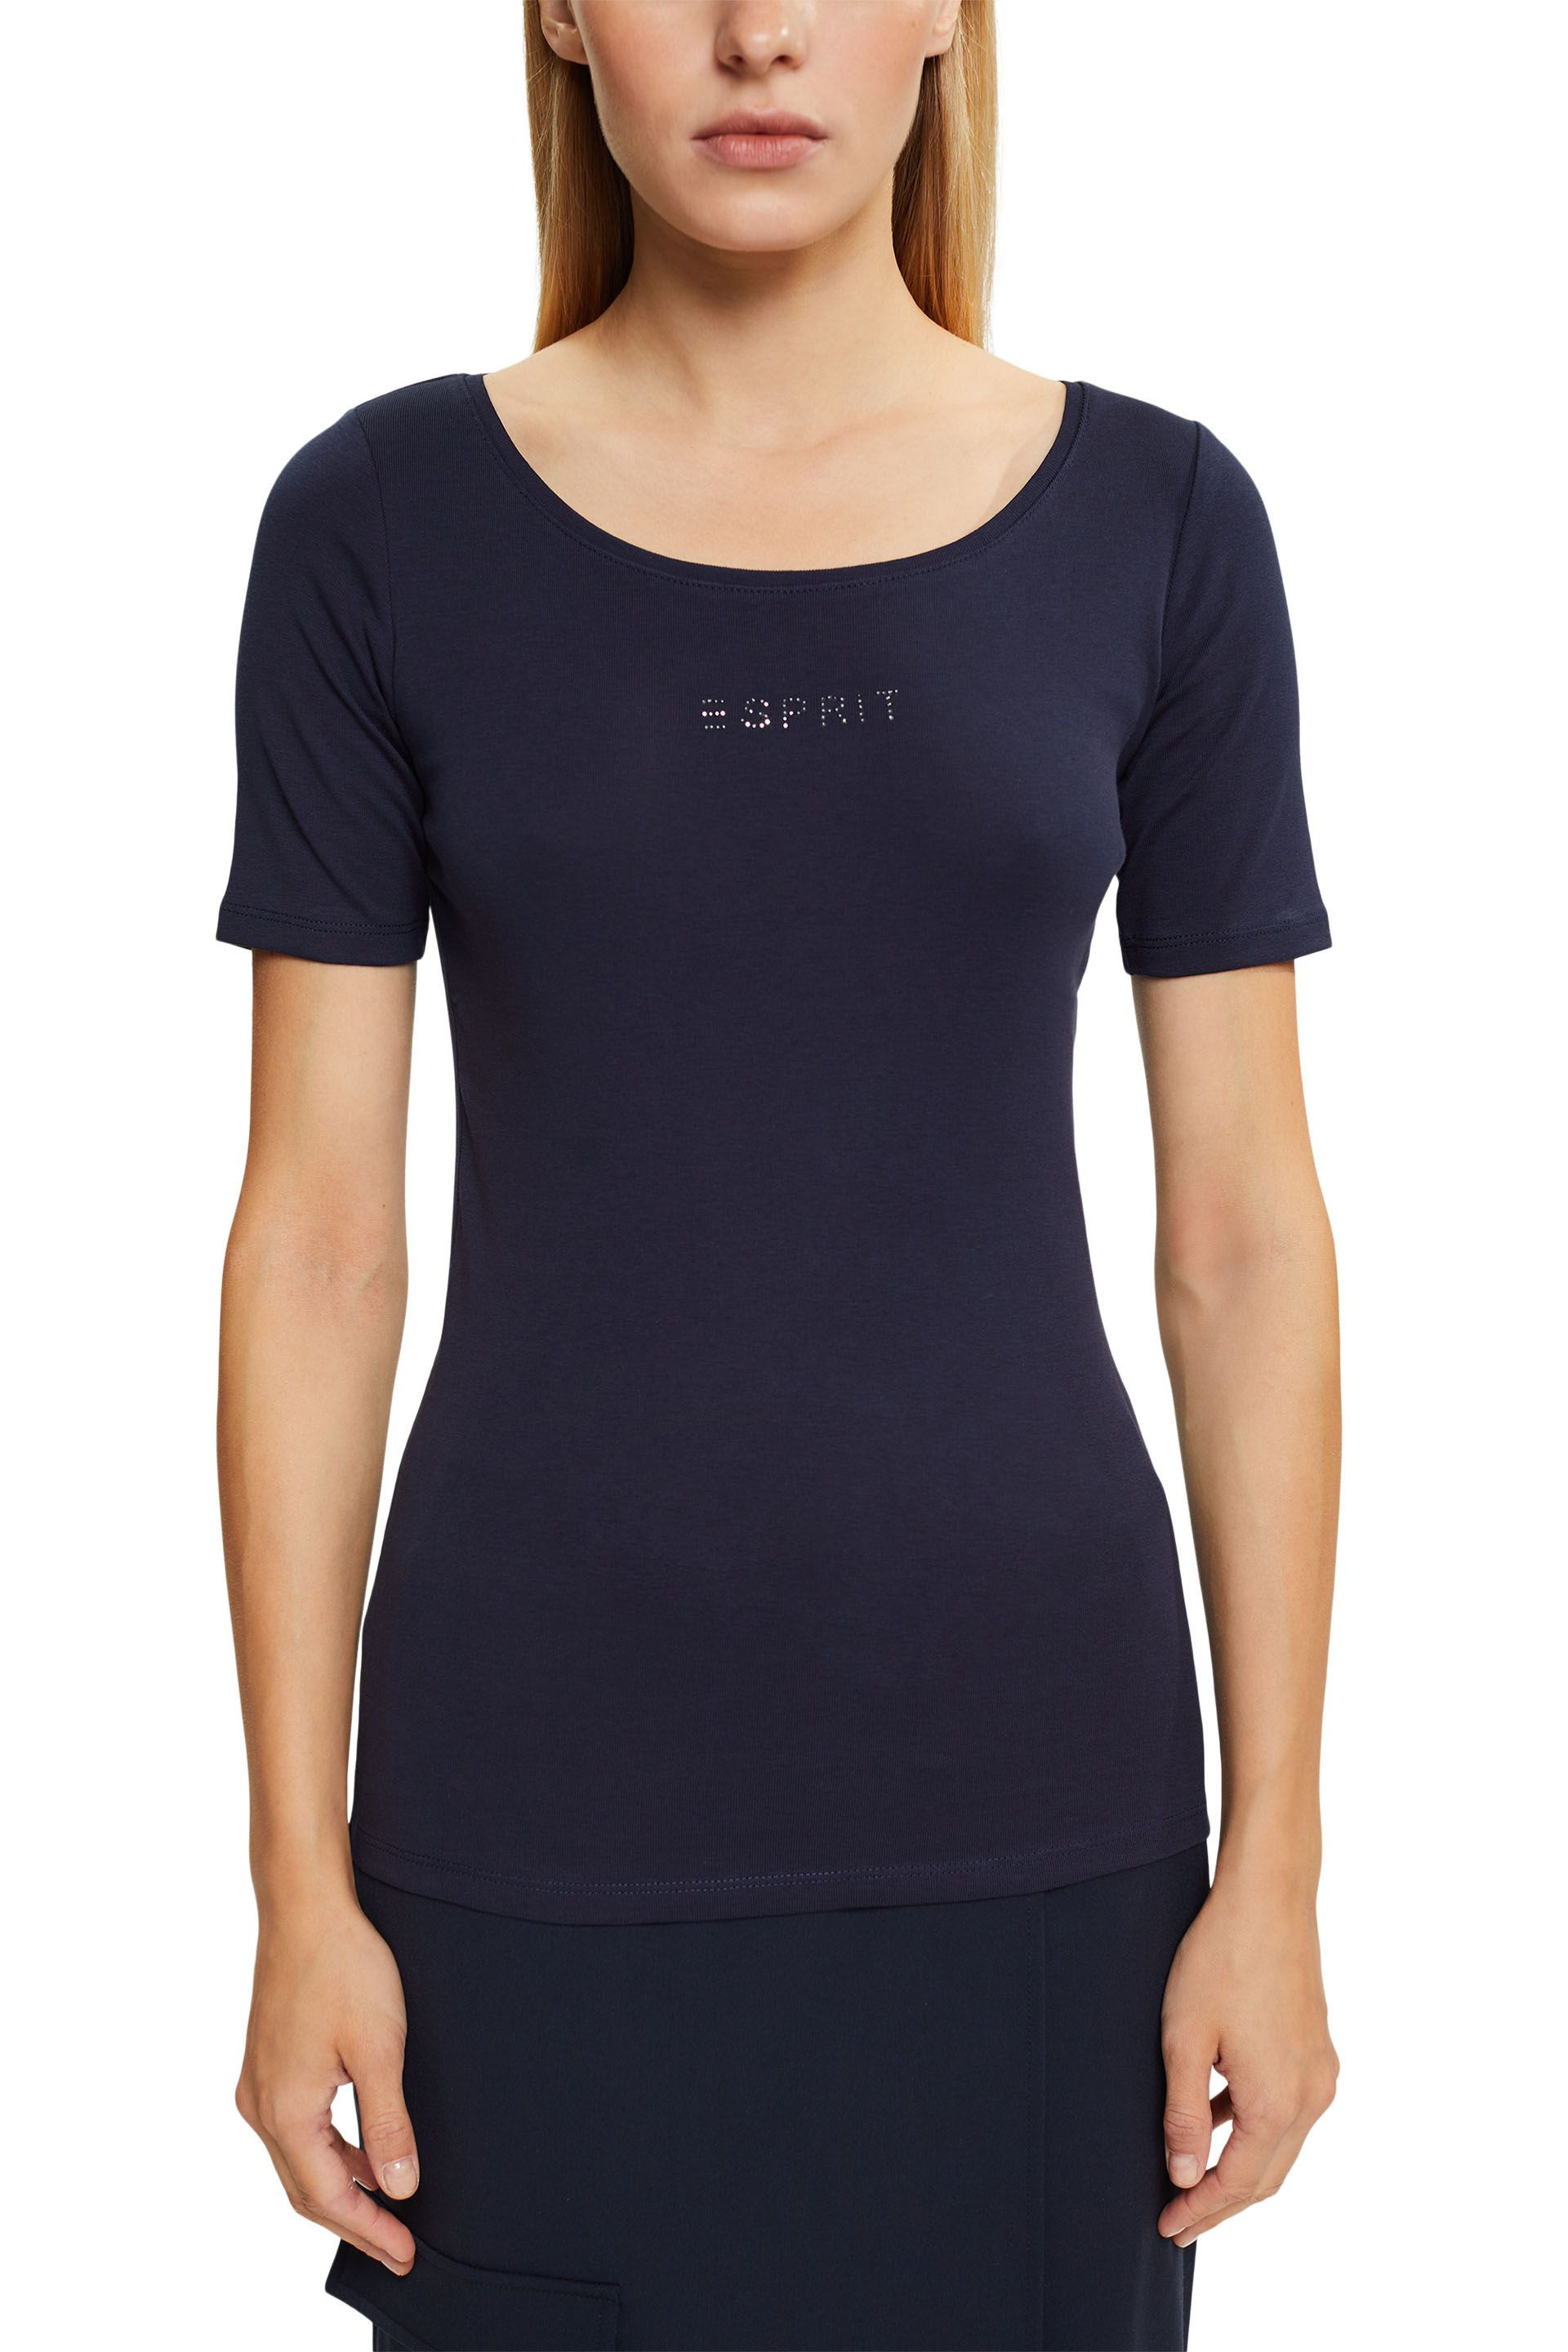 Esprit - Cotton logo T-shirt, Dark Blue, large image number 1